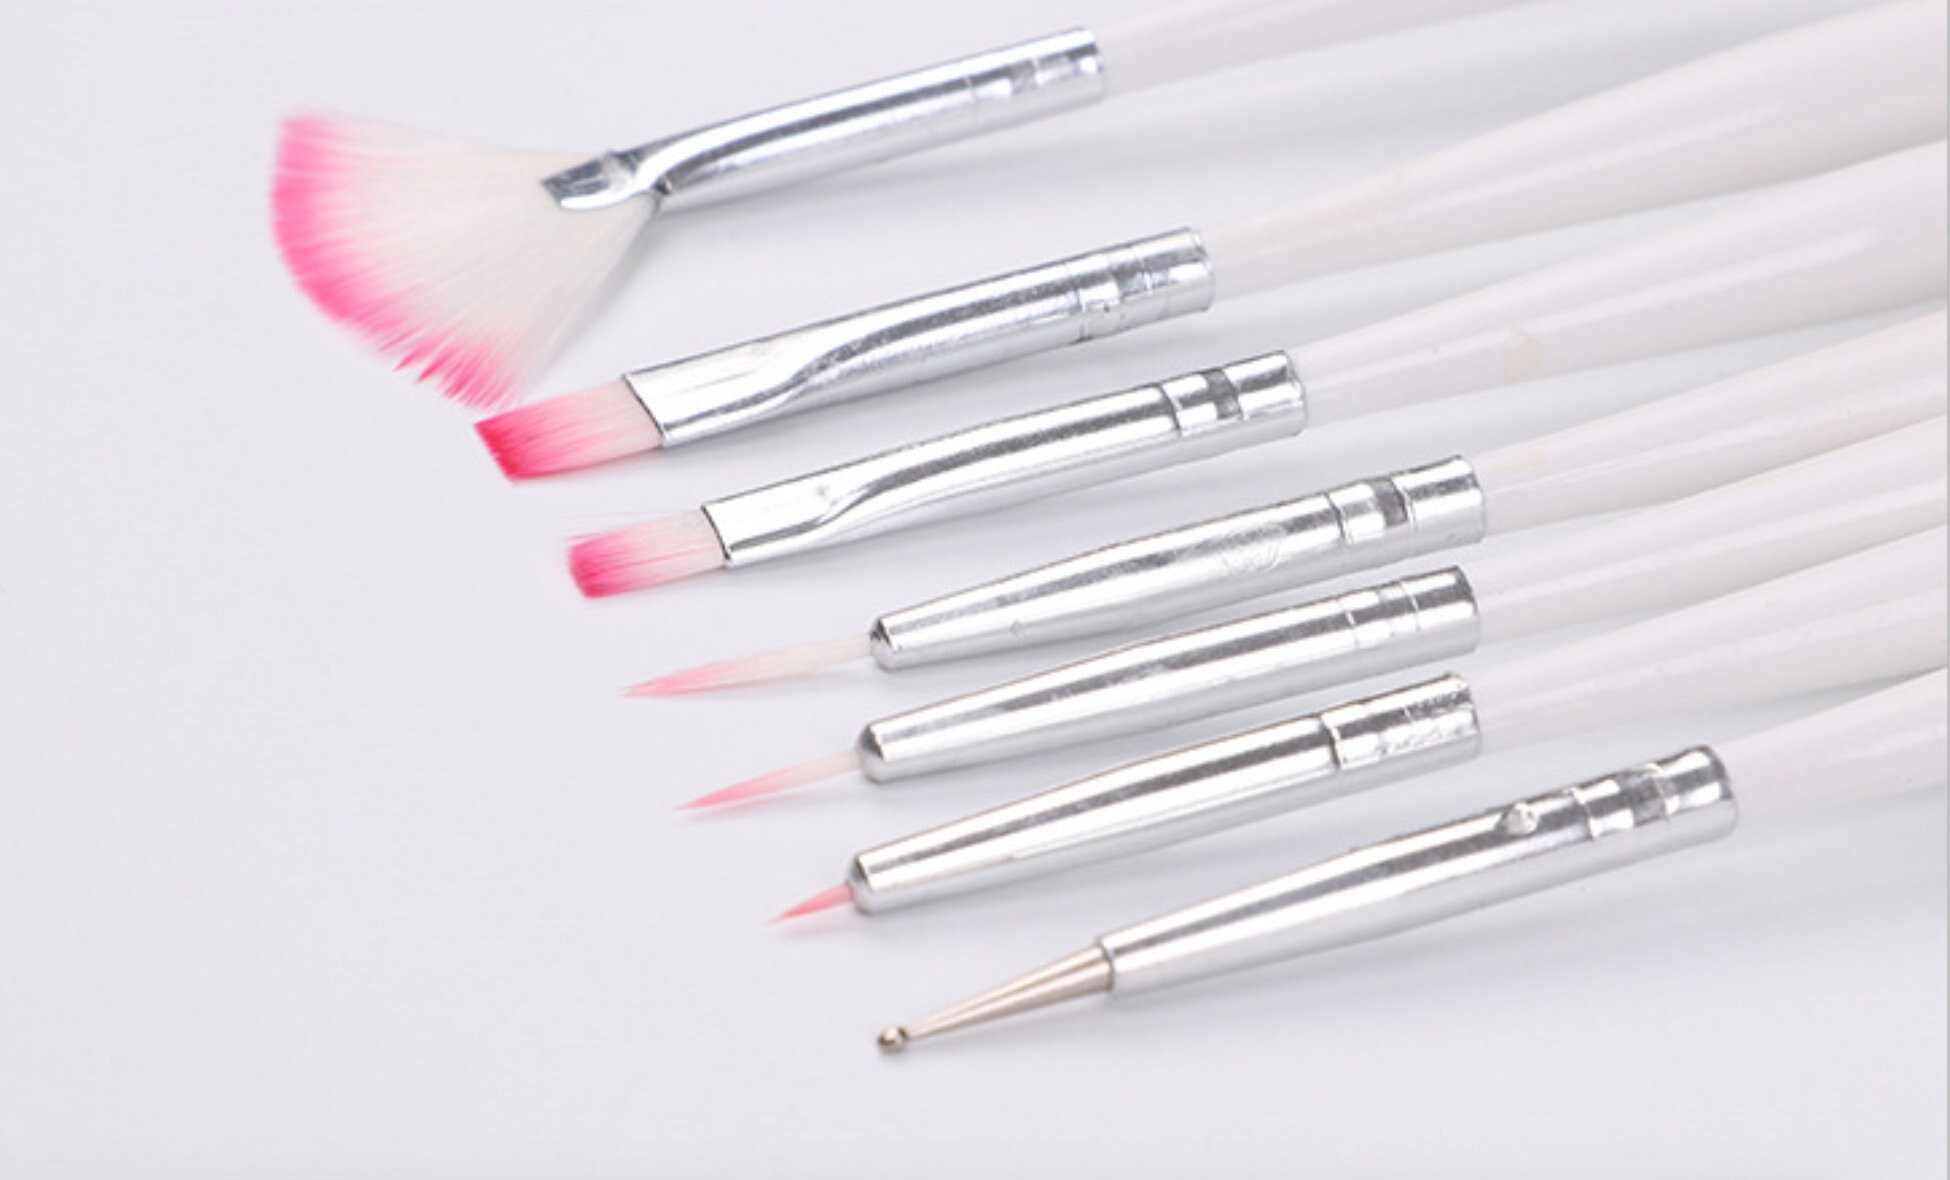 WNG Brushes Set 10Pcs Design Pen Painting Tools with Nail